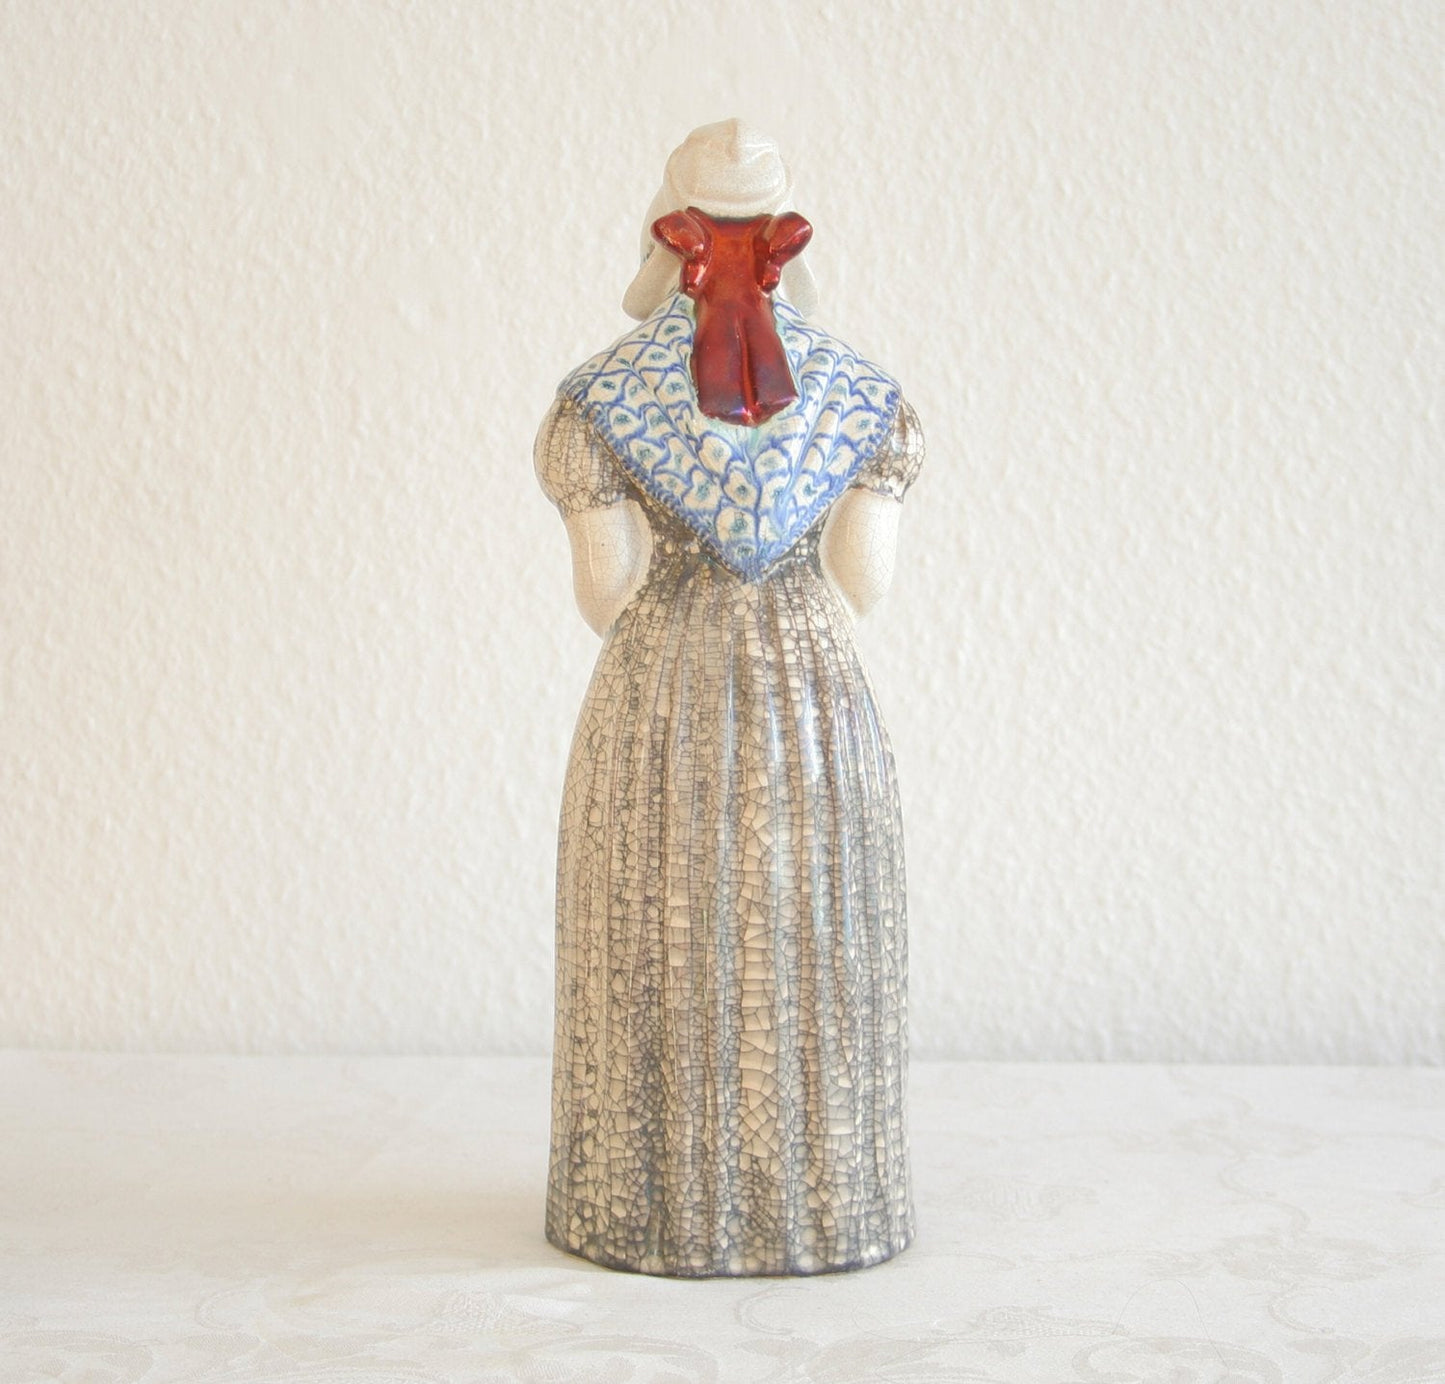 MICHAEL ANDERSEN Large Decorated Woman in Traditional Bornholm Dress Ceramic Figurine Mollaris.com 